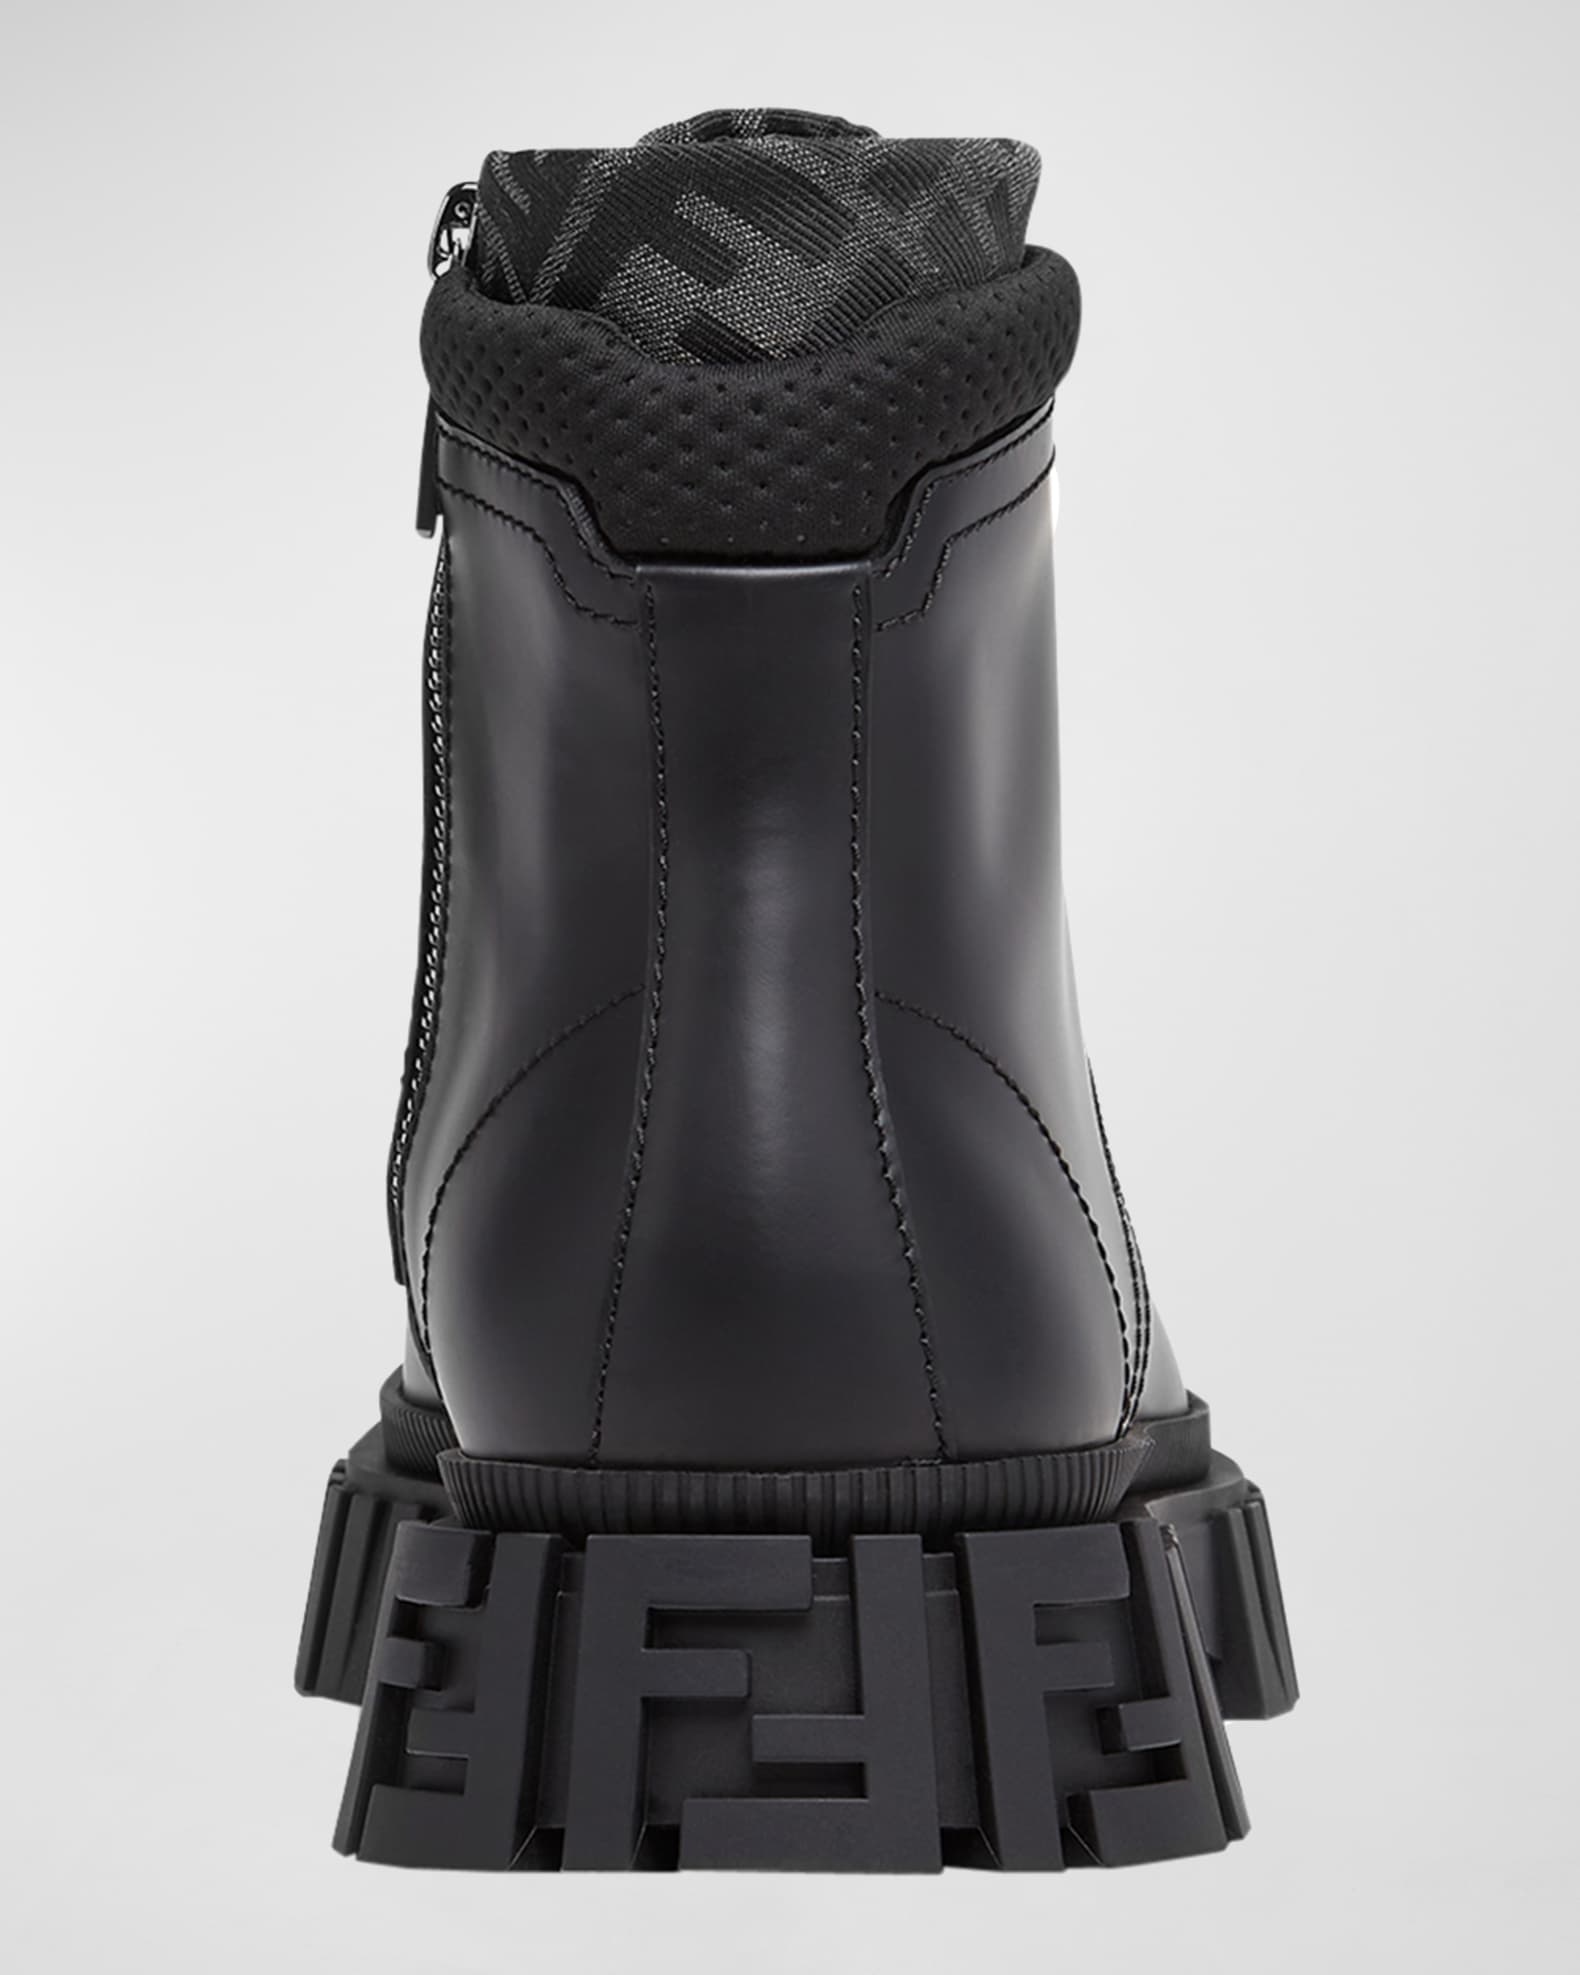 Fendi Men's Force FF Leather Lug-Sole Combat Boots | Neiman Marcus